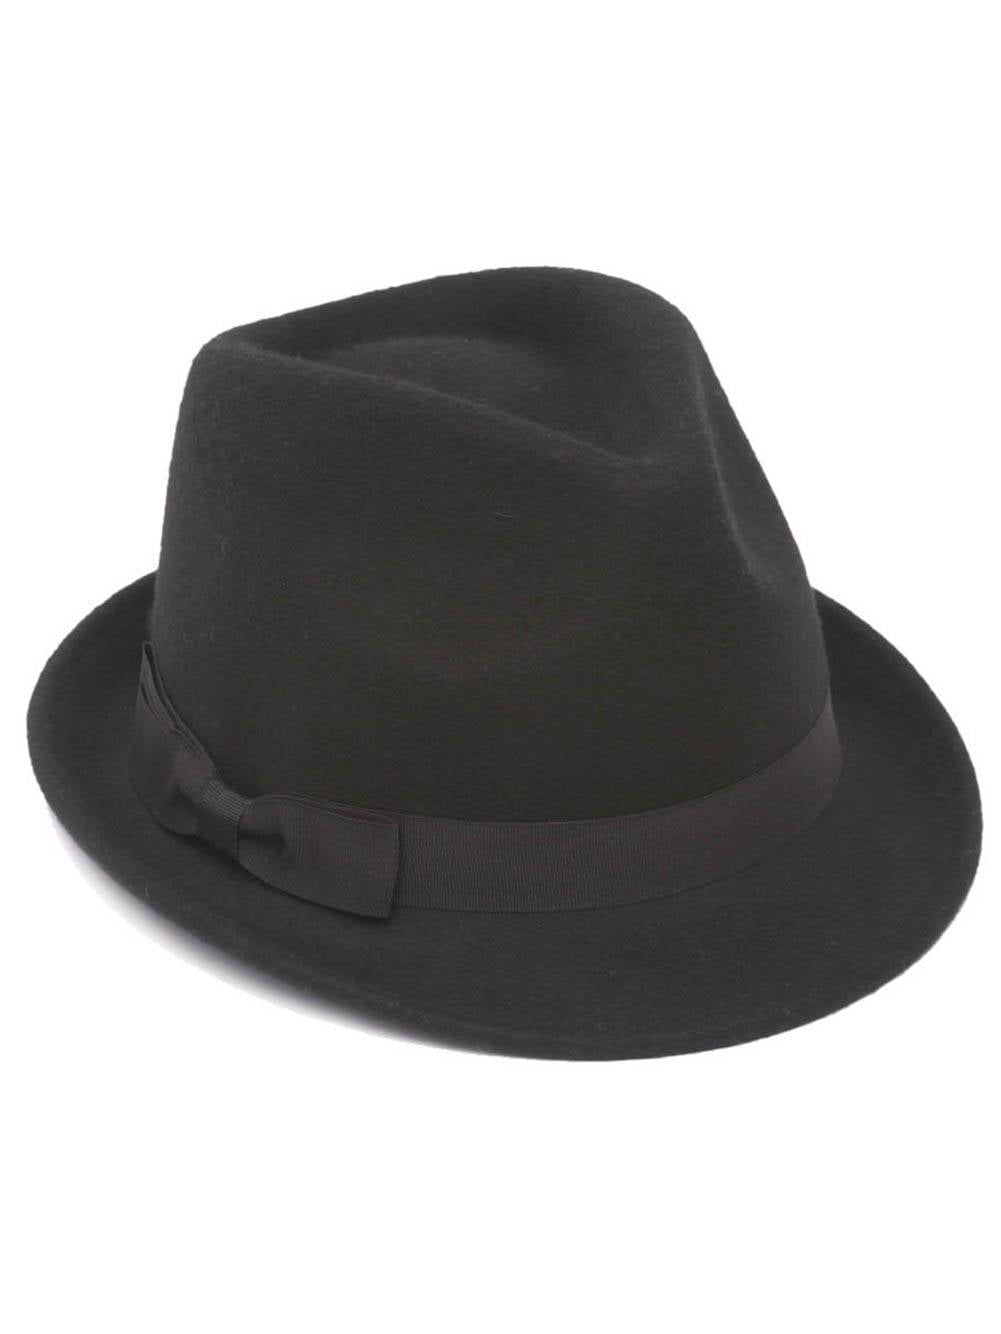 Warm Wool Fedora With Bow hatband Cute Black Classic Vintage Trilby Hat 